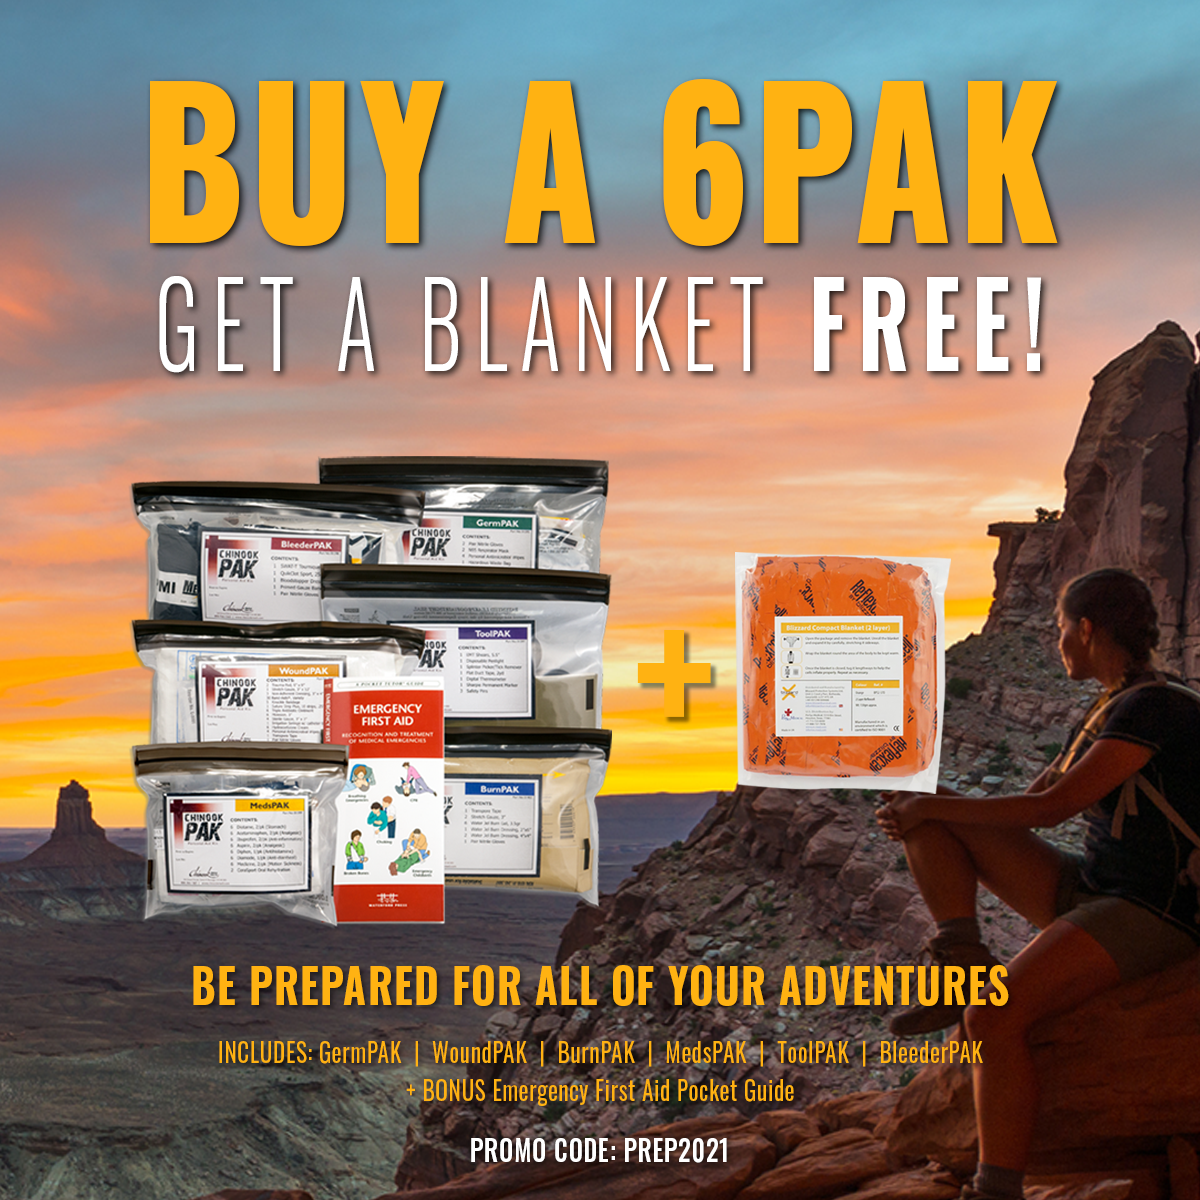 Buy a 6PAK - Get a Survival Blanket Free